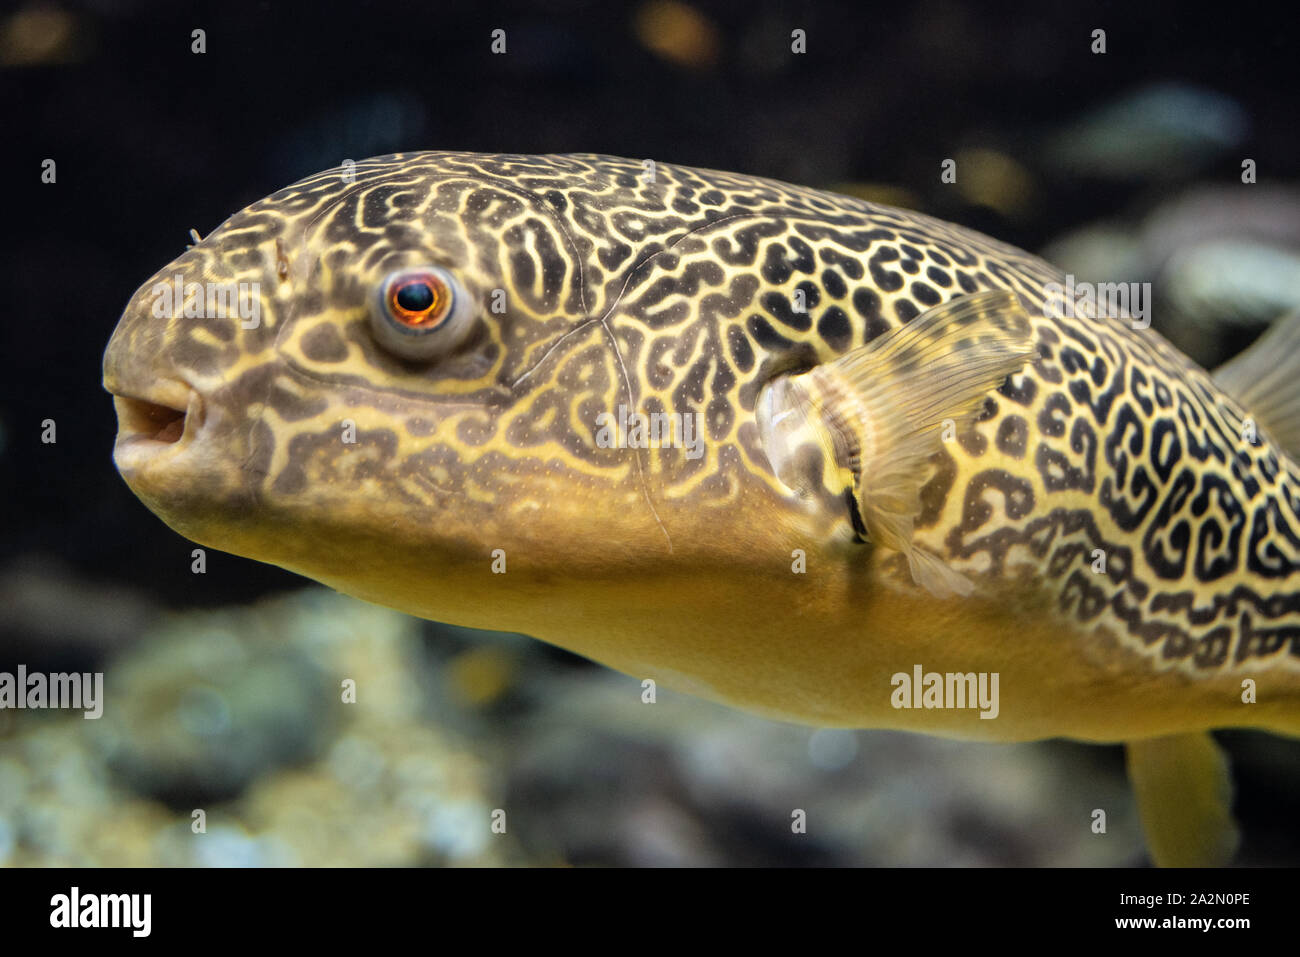 Aquarium kugelfisch -Fotos und -Bildmaterial in hoher Auflösung – Alamy